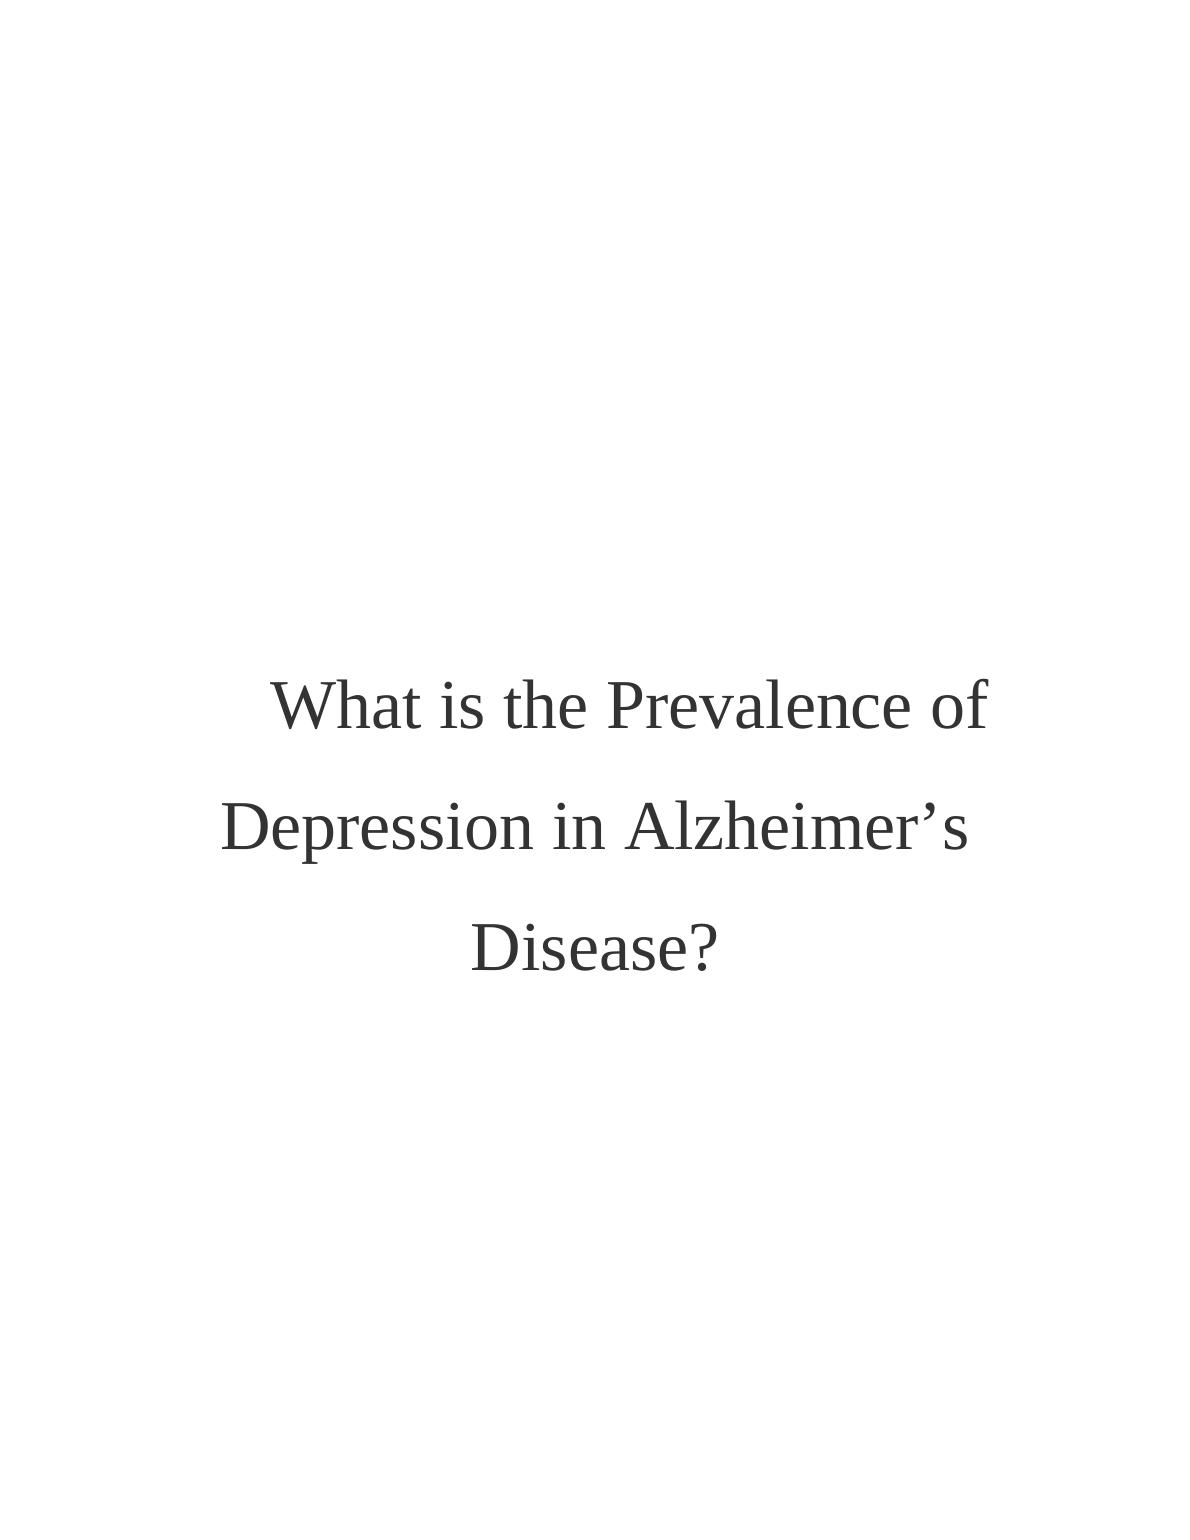 Prevalence of Depression in Alzheimer’s Disease_1